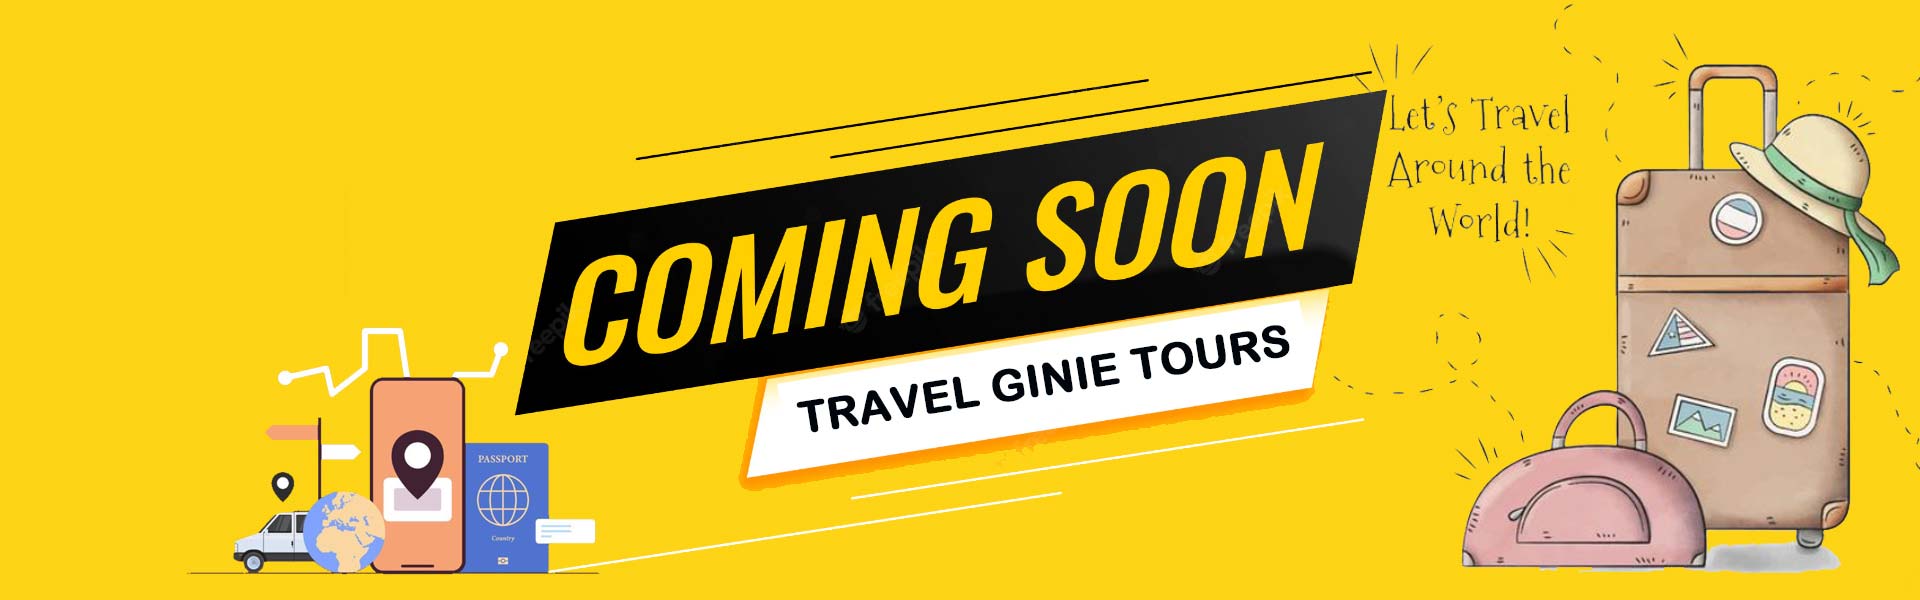 travel_ginie_tours